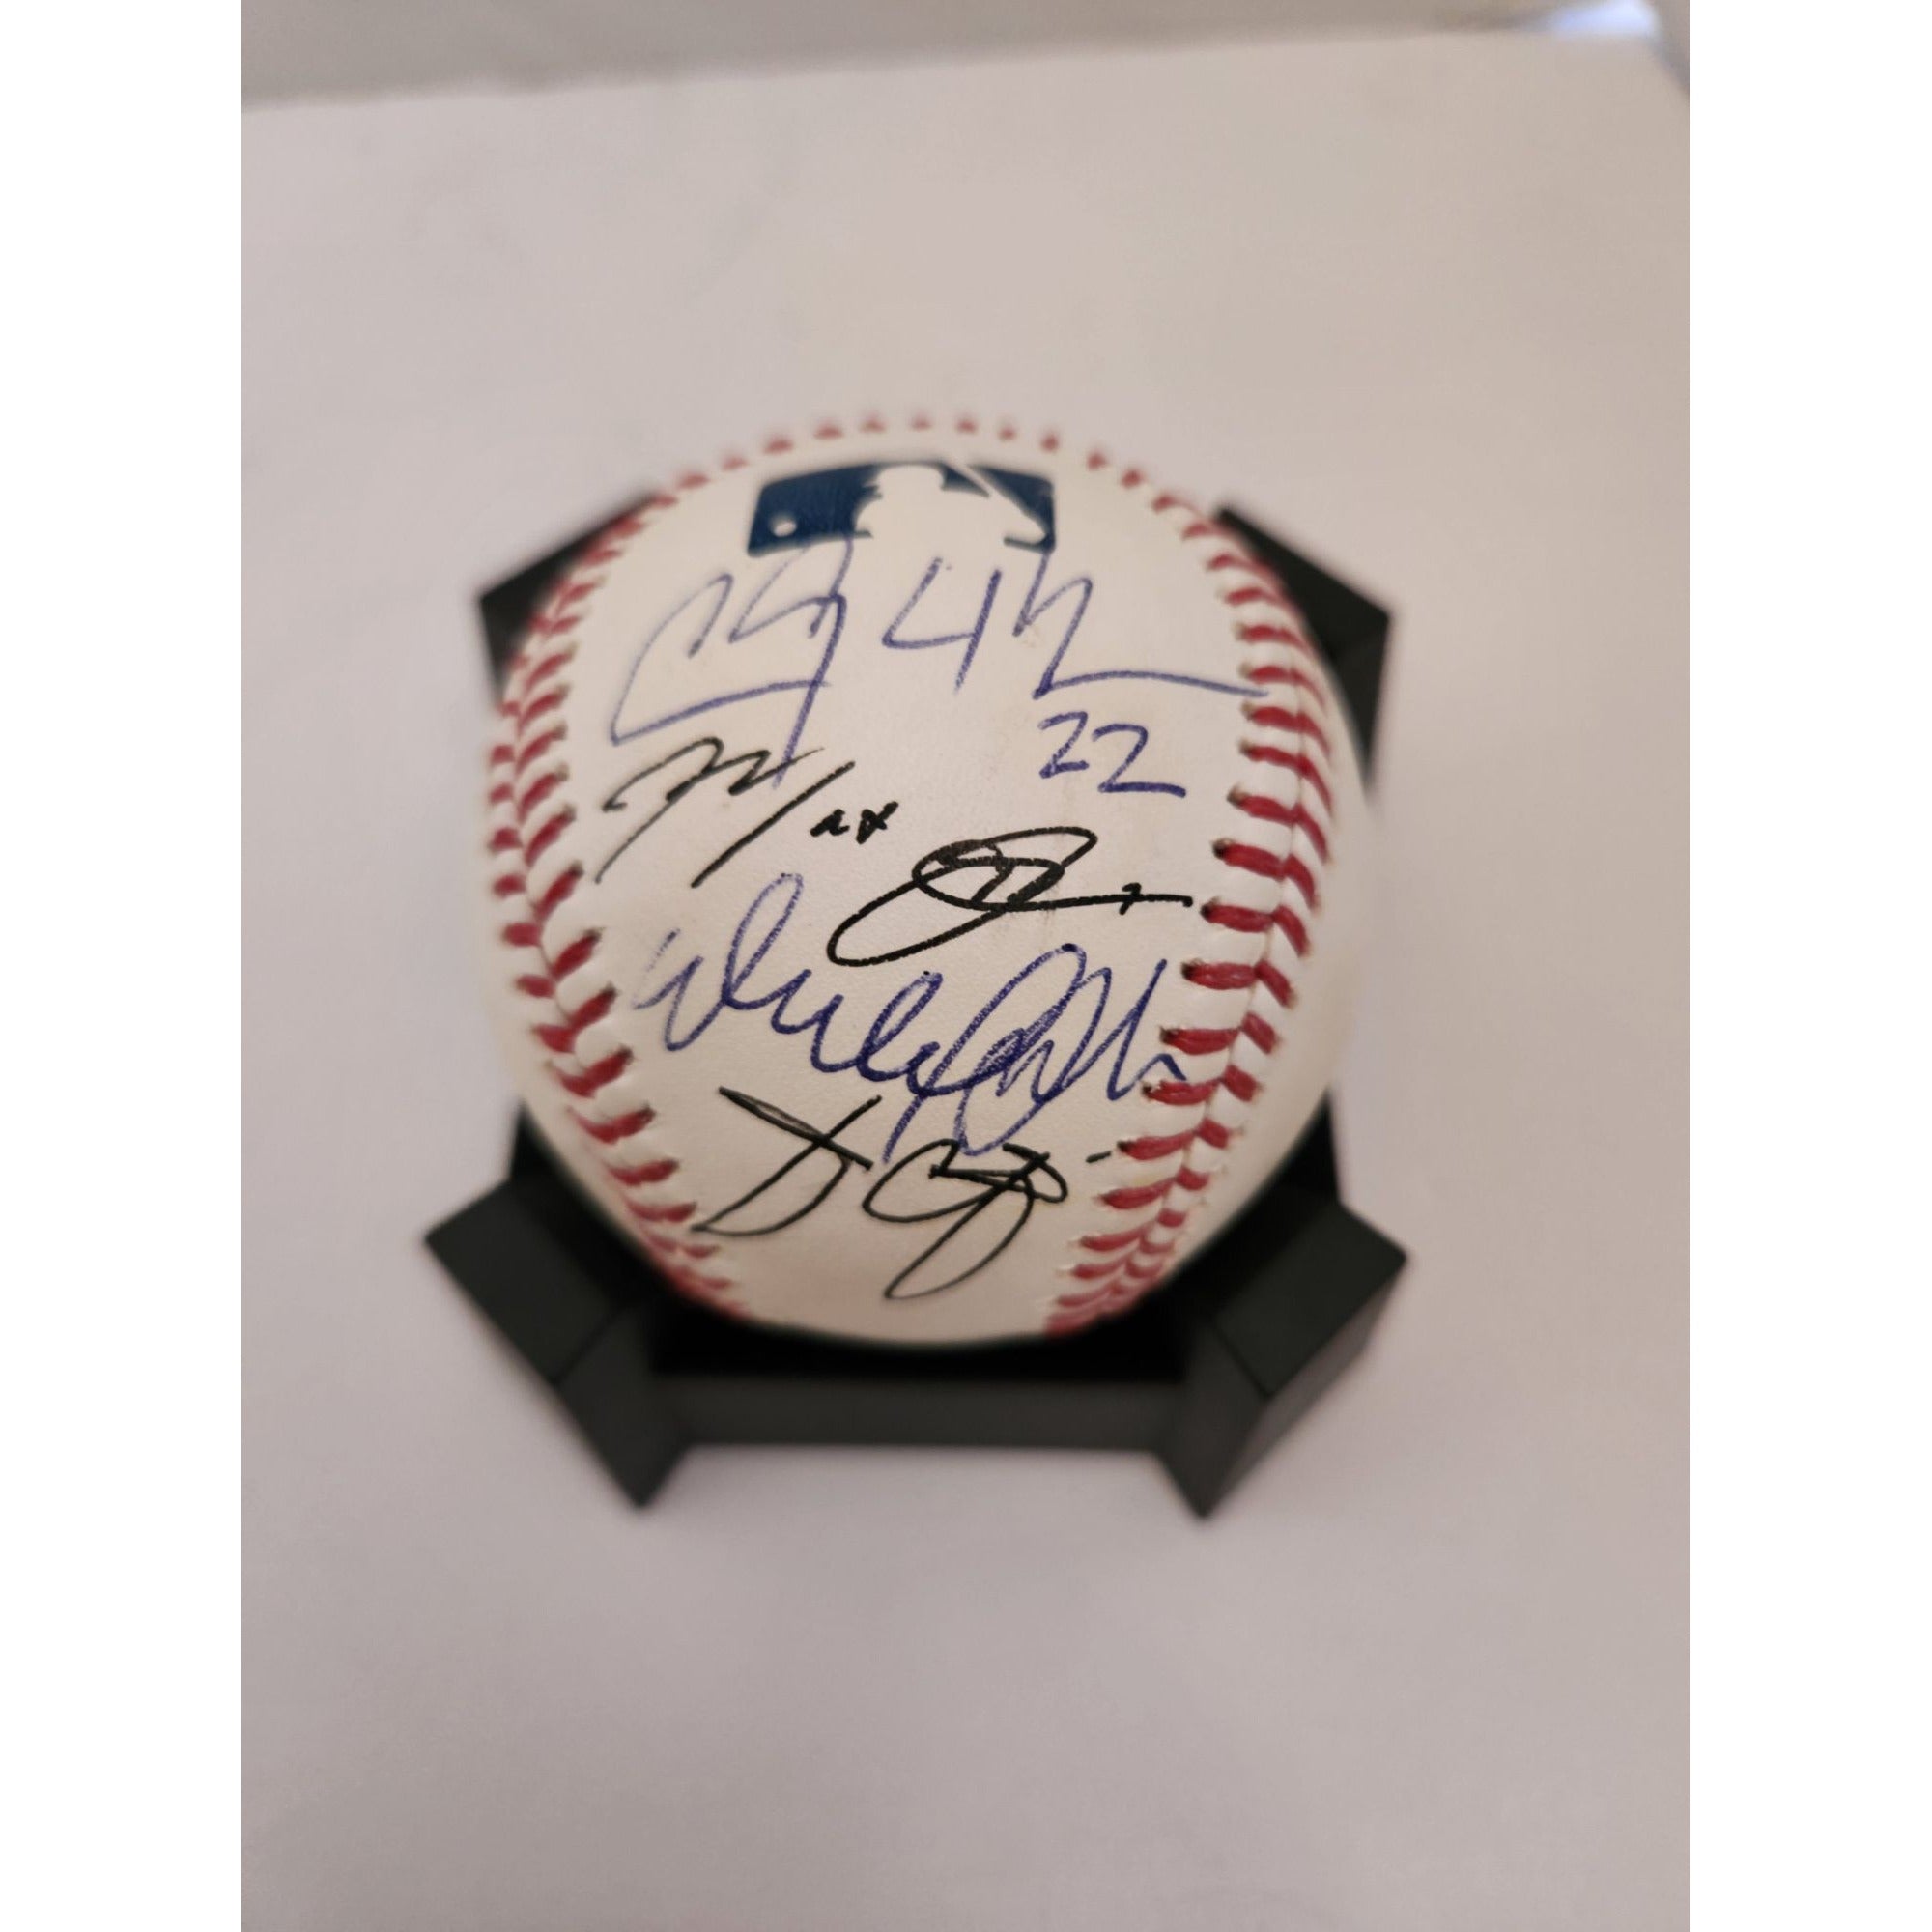 Clayton Kershaw Julio Arias Walker Buehler Max Scherzer MLB Rawlings Baseball signed with proof free acrylic display case